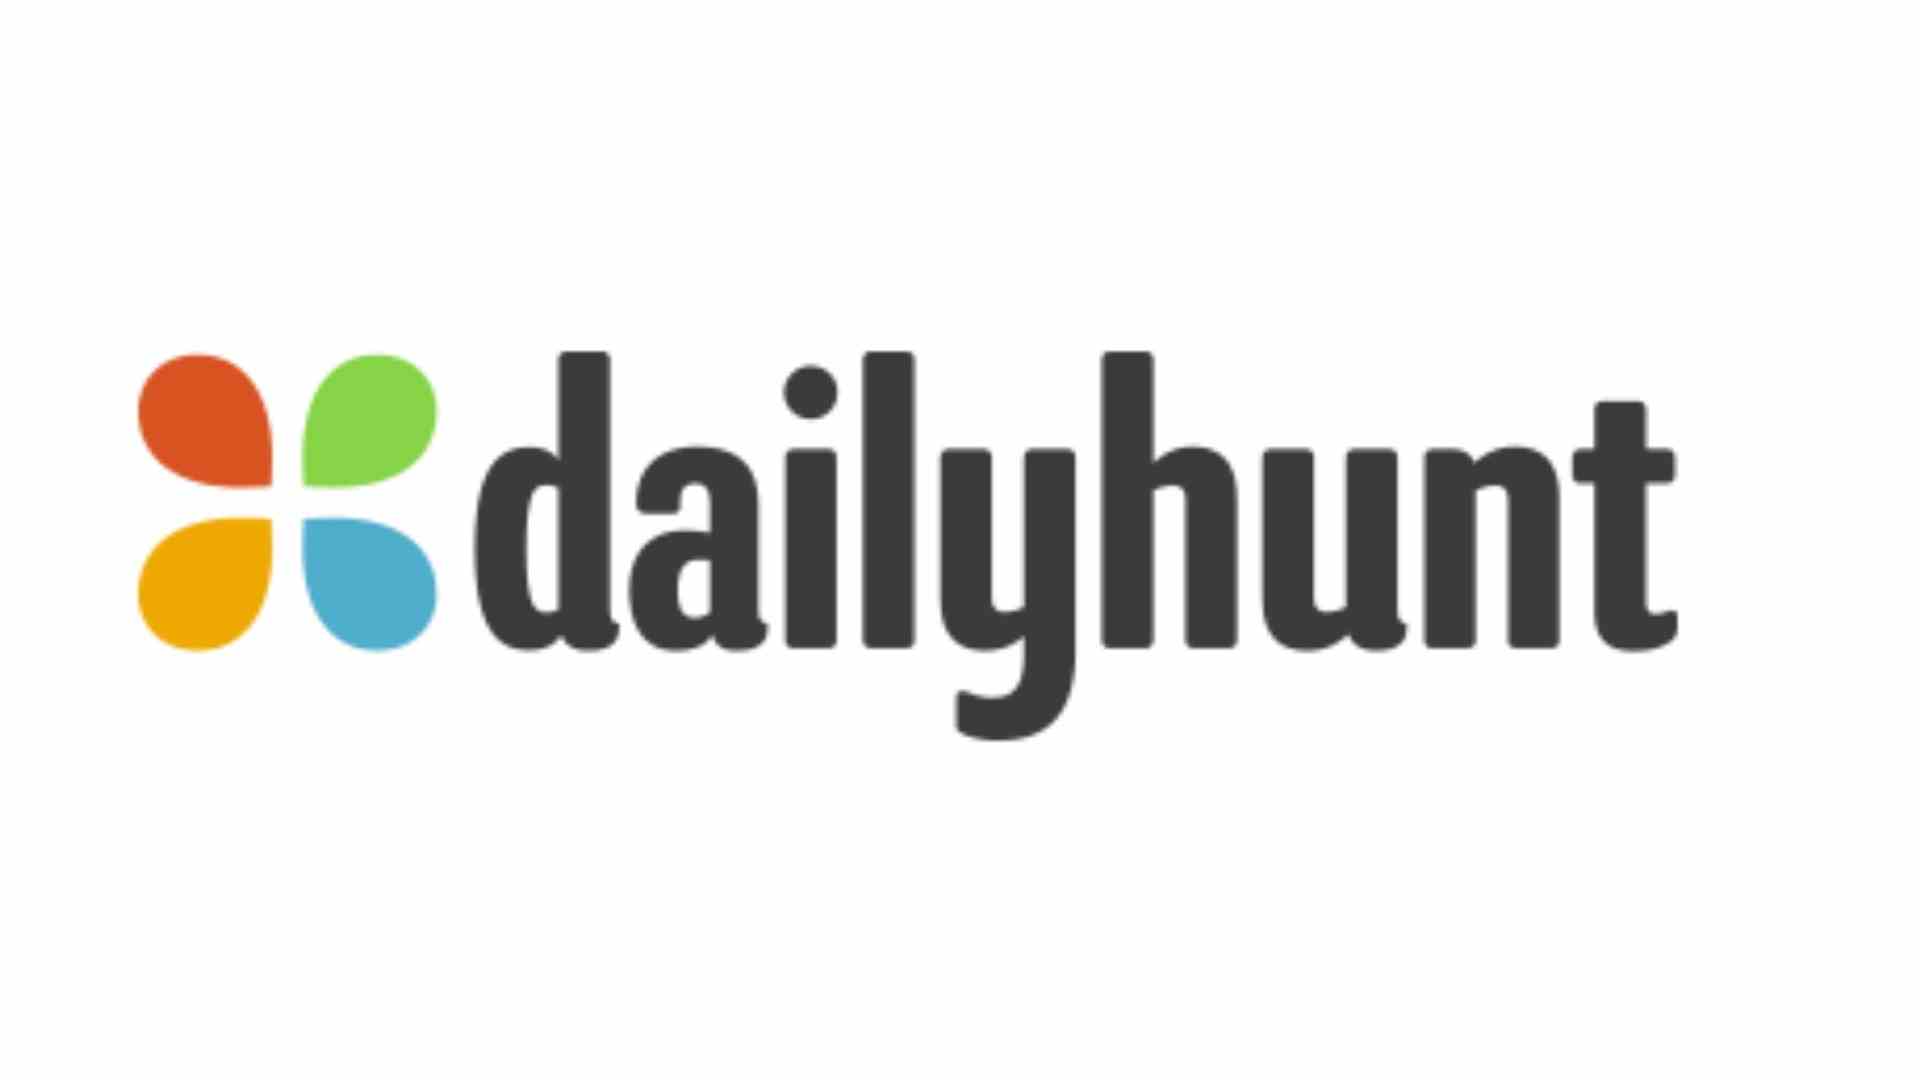 Dailyhunt's parent crosses $1 billion in valuation, enters unicorn club - Exchange4media